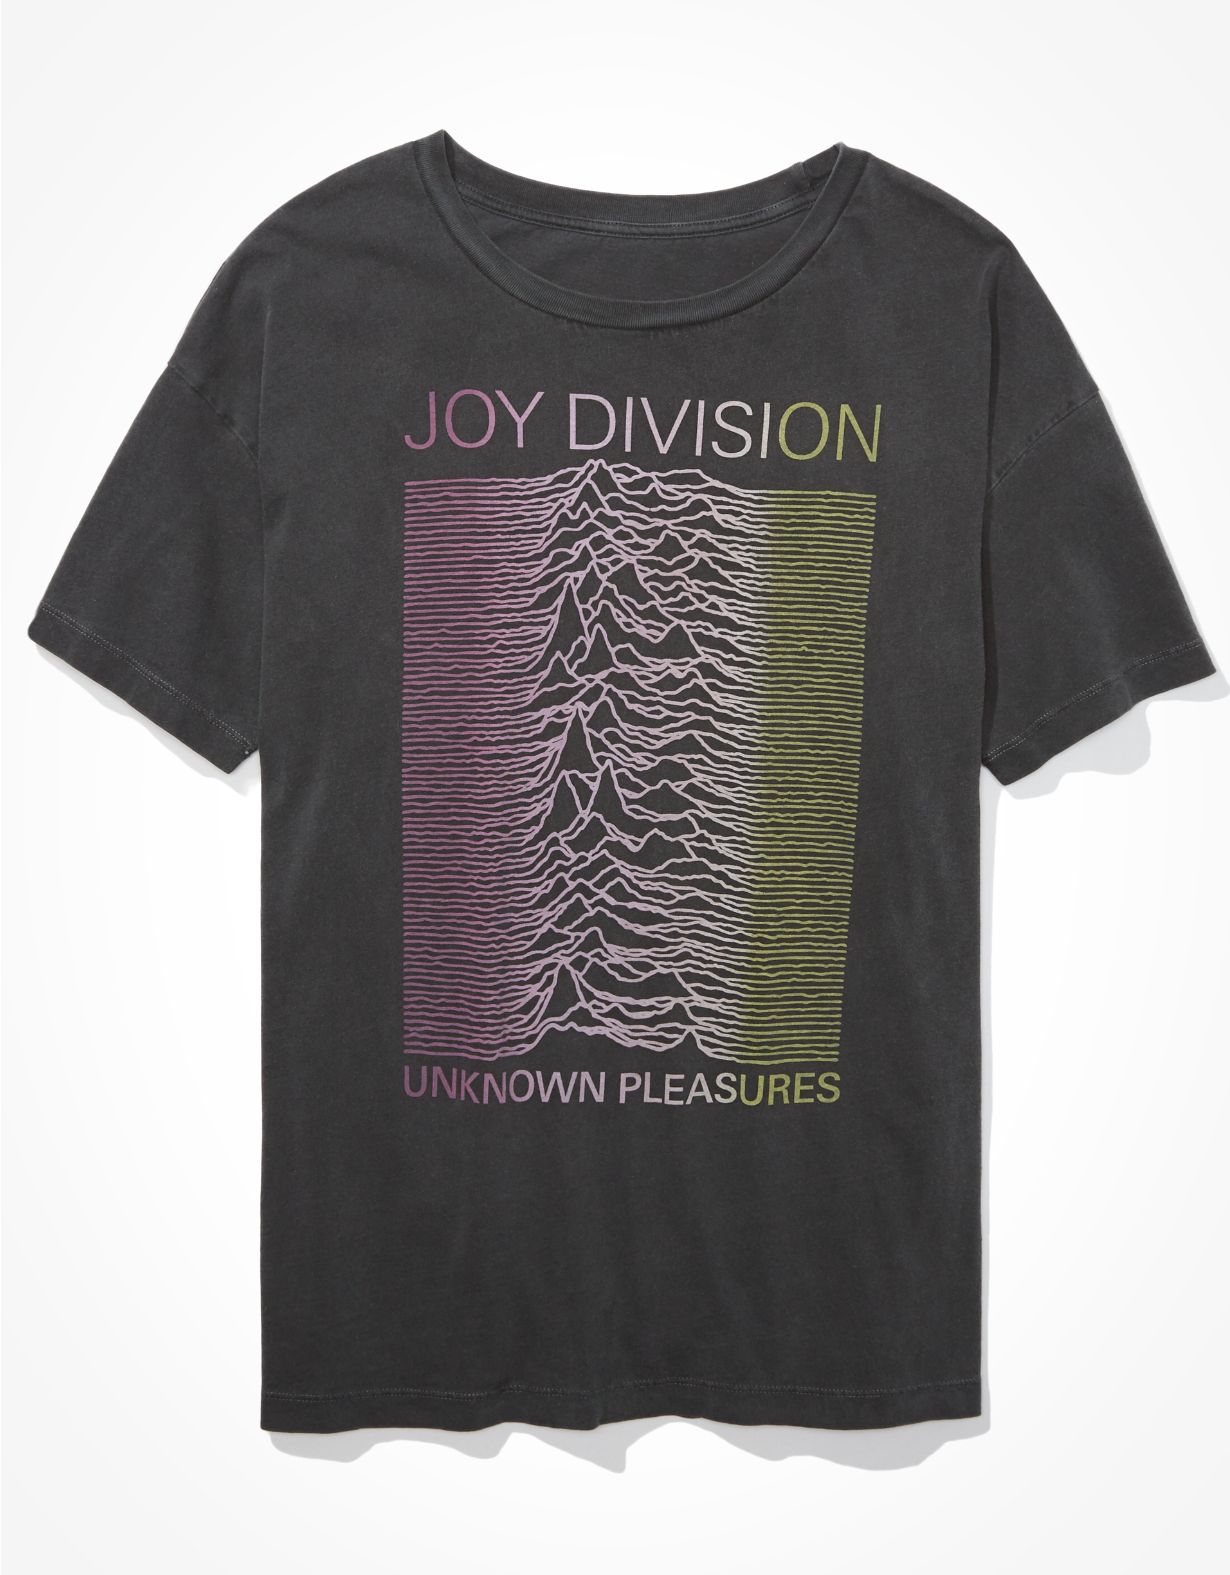 Tailgate Women's Joy Division Oversized Graphic T-Shirt